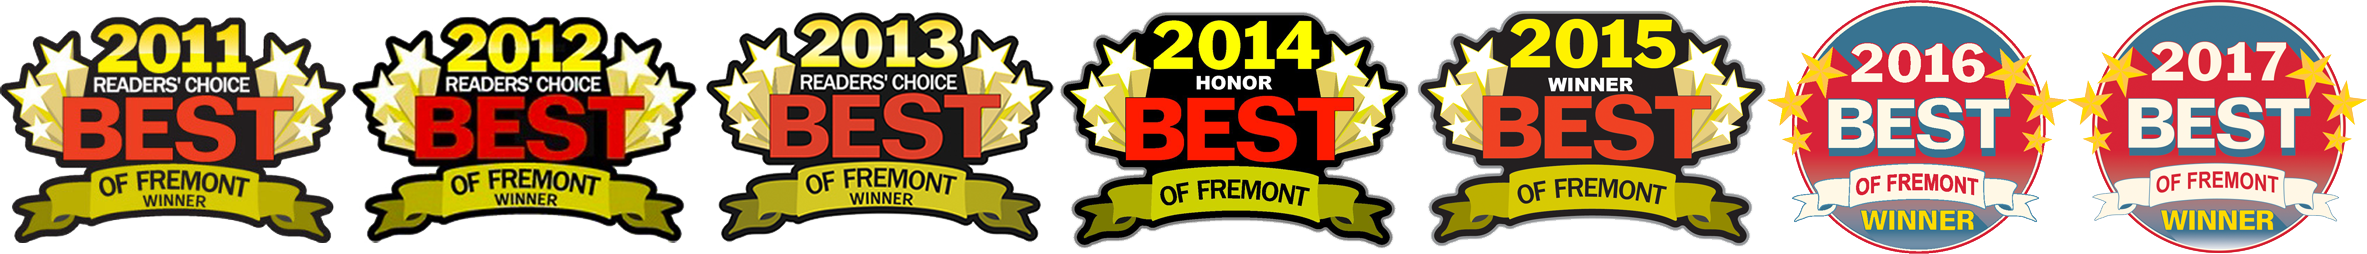 Best of Freemont Logos